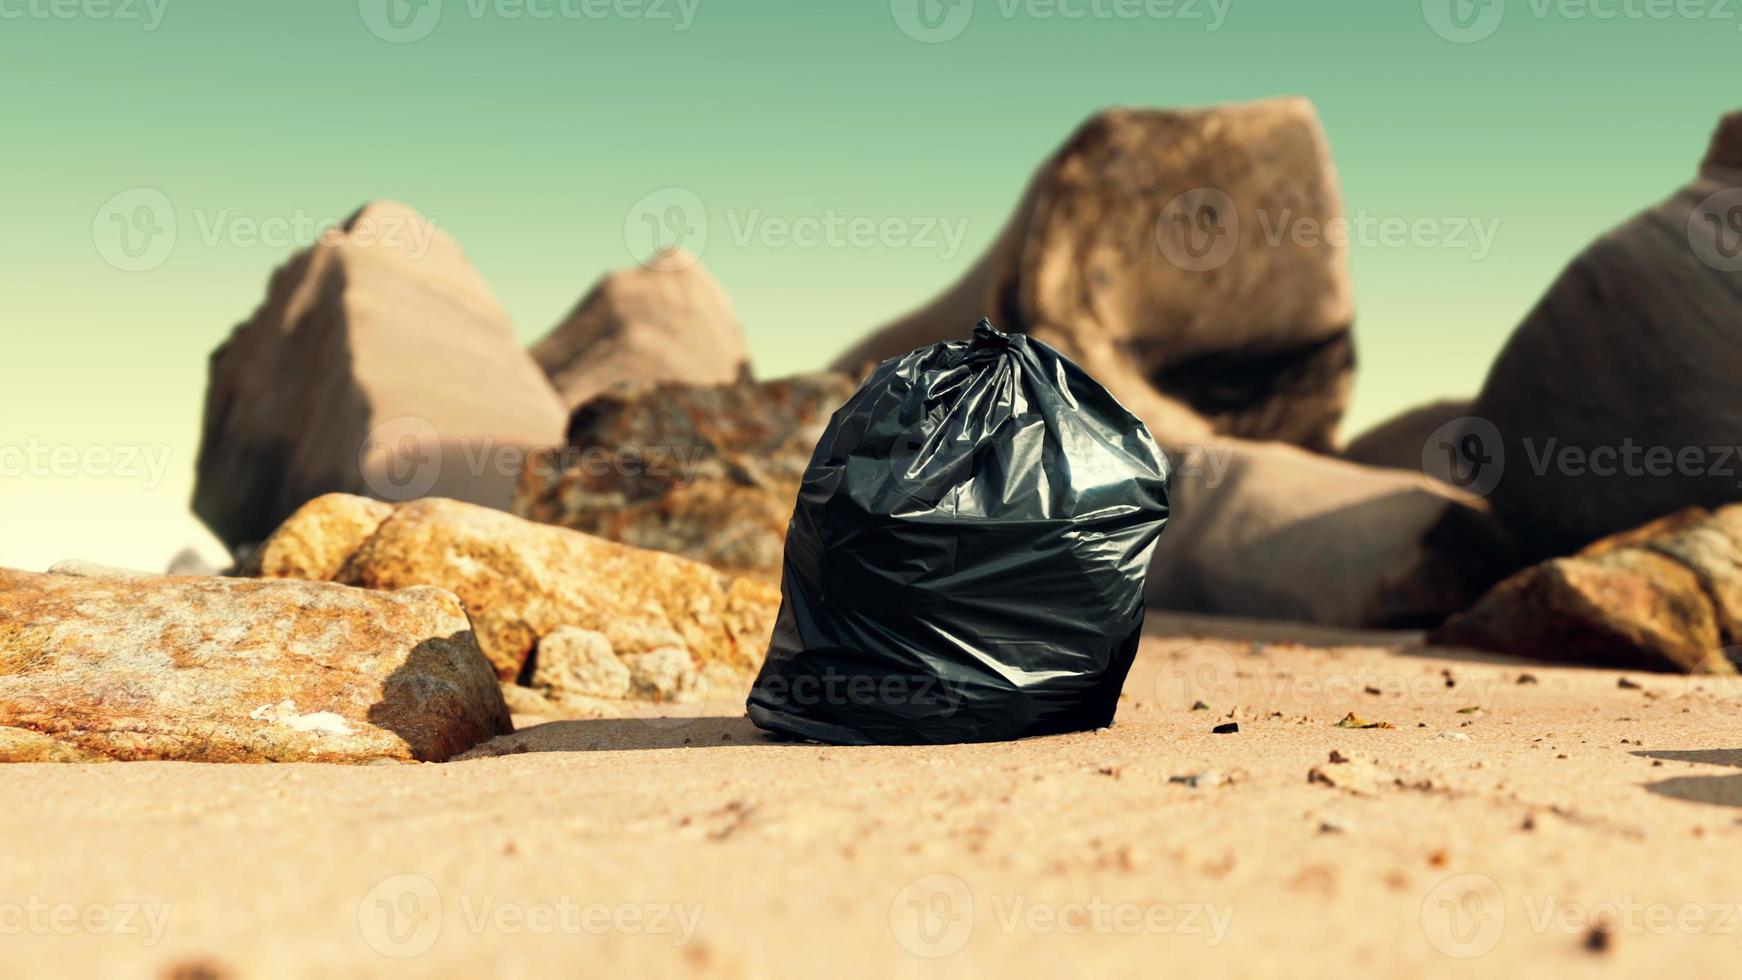 zwarte plastic vuilniszak vol afval op het strand foto